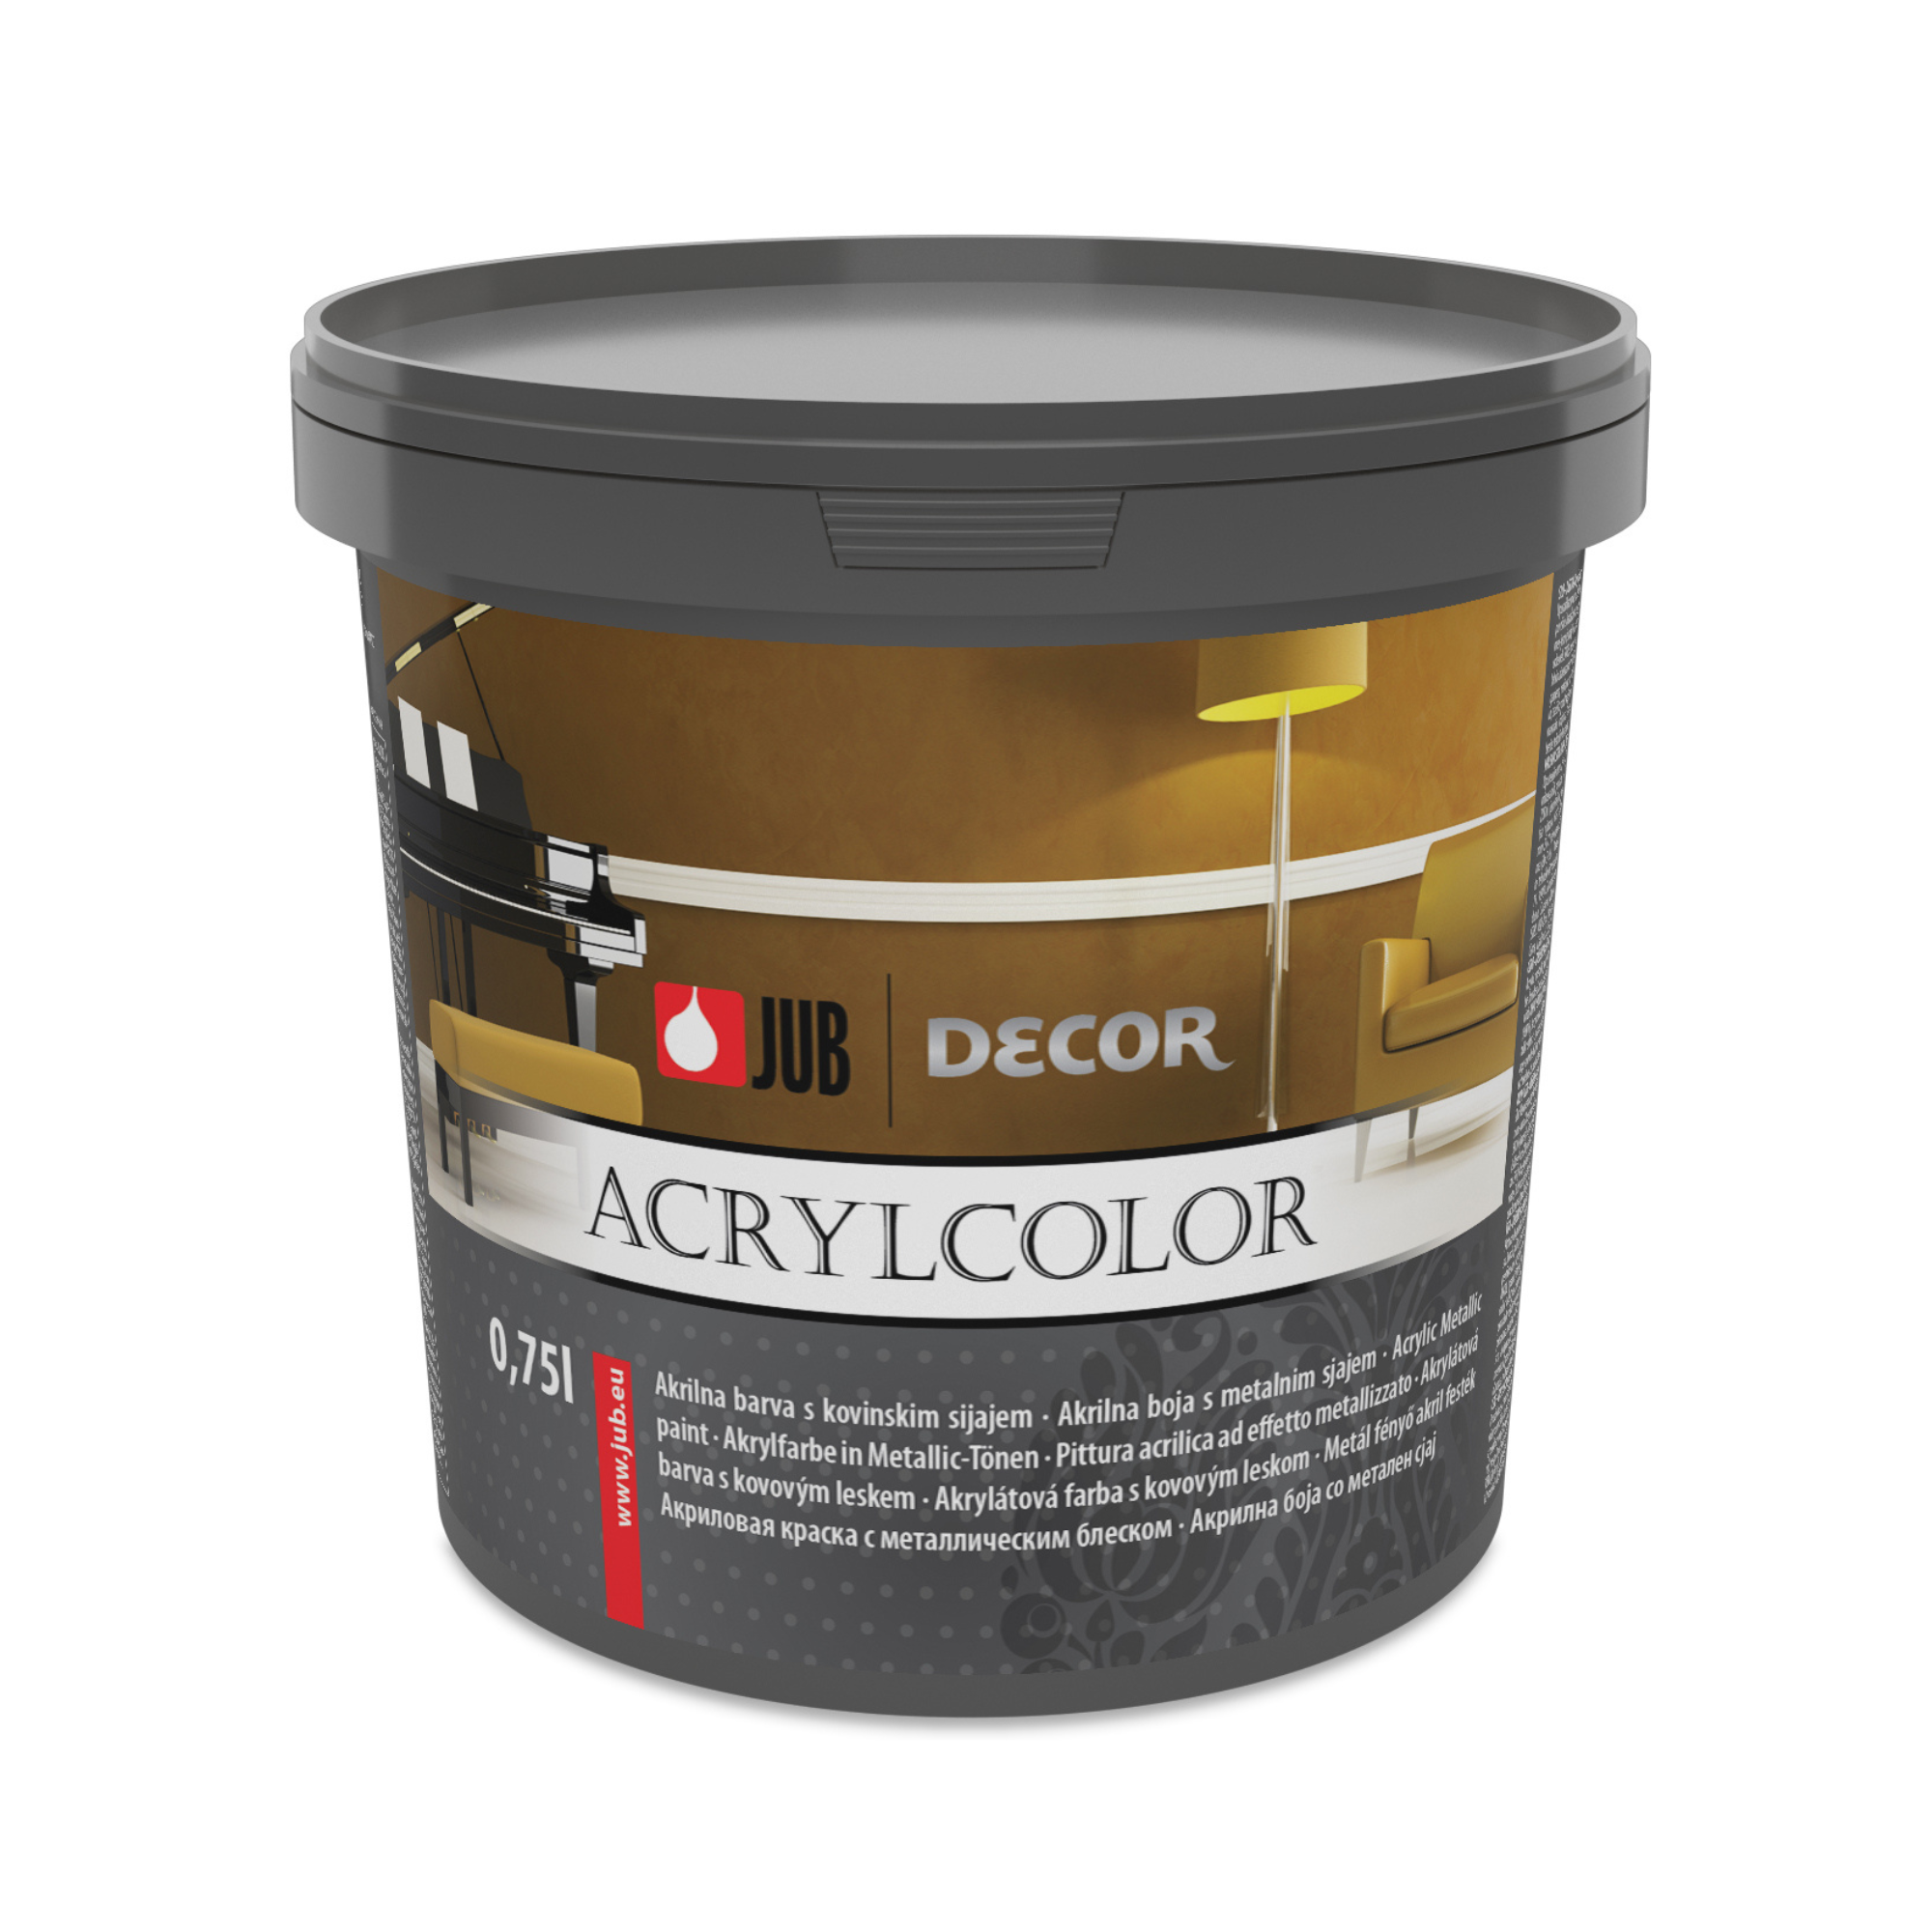 JUB DECOR Acrylcolor akrylátová metalická farba 0,75 l